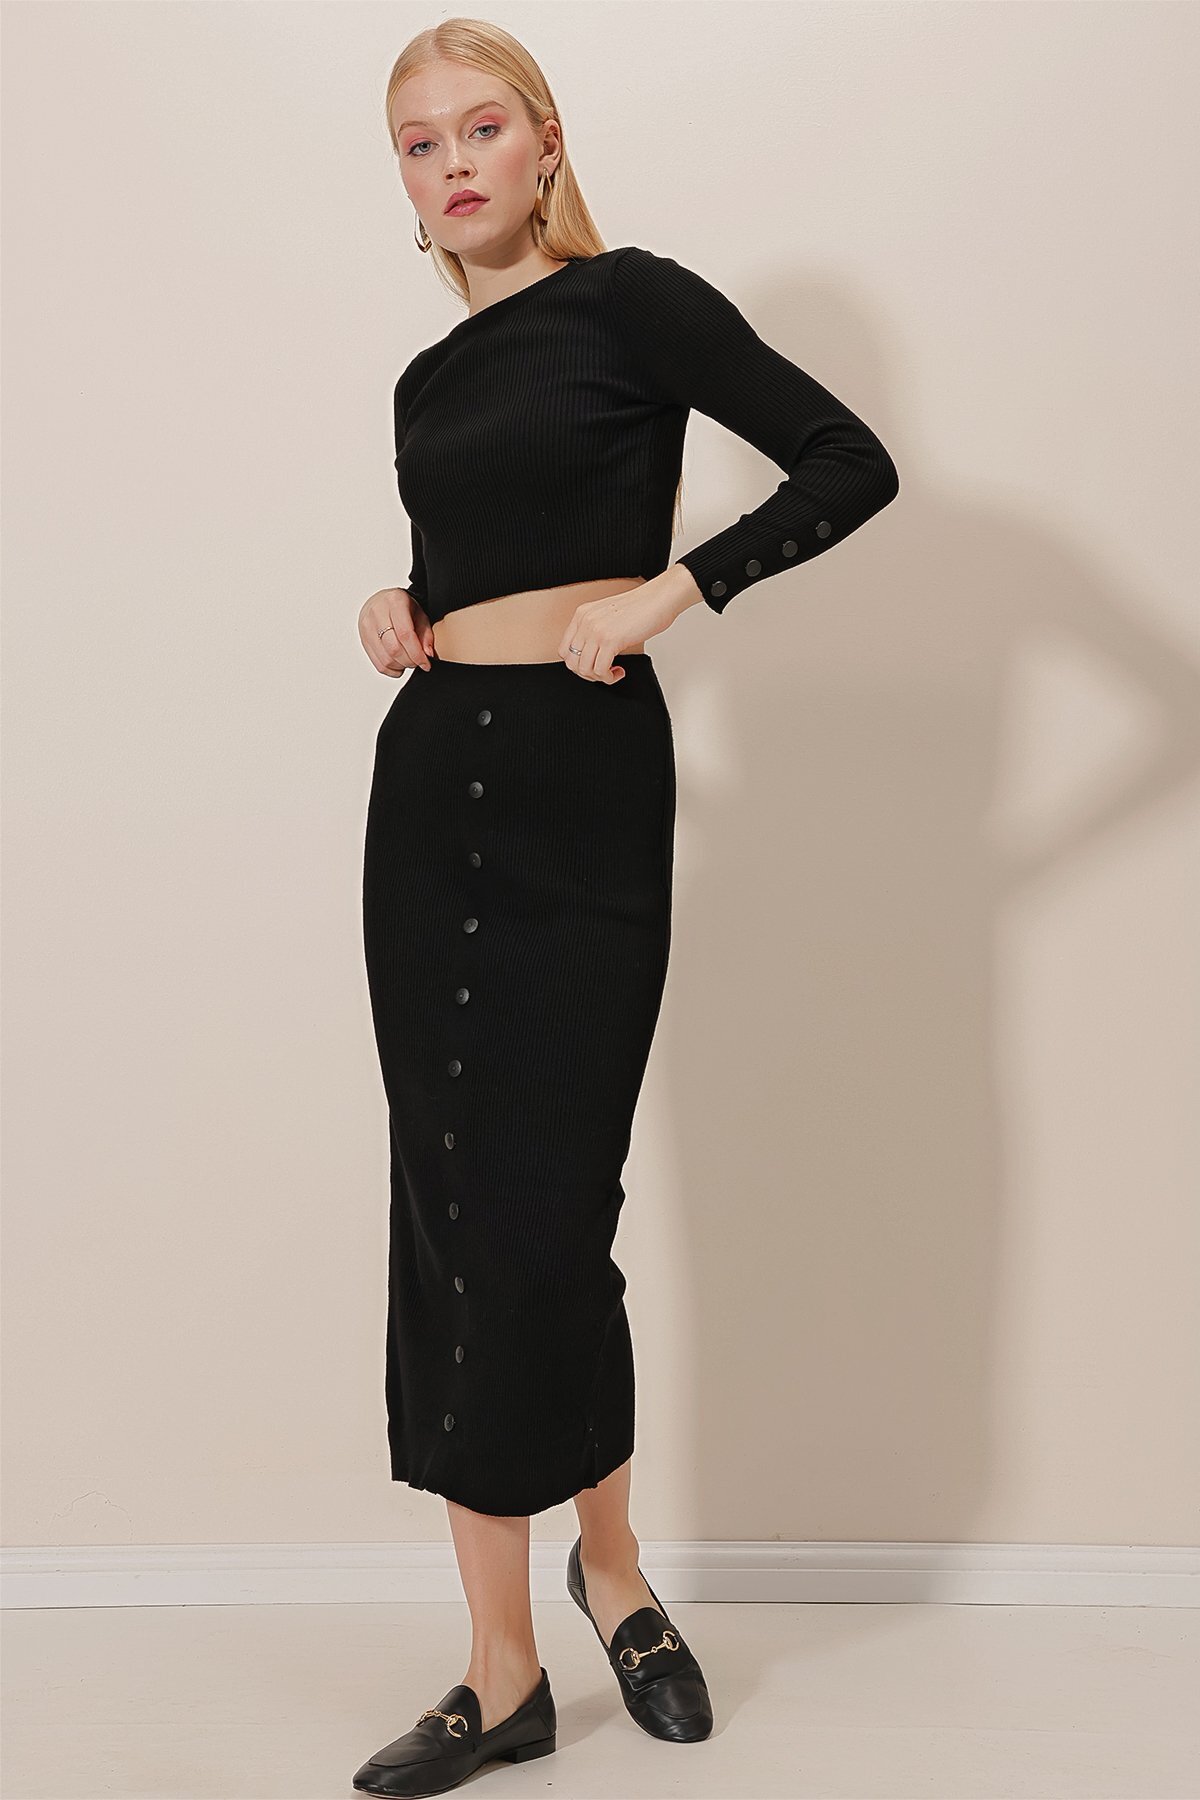 HAKKE Women's Skirt-Length Buttoned Knitwear Bottom-Top Set